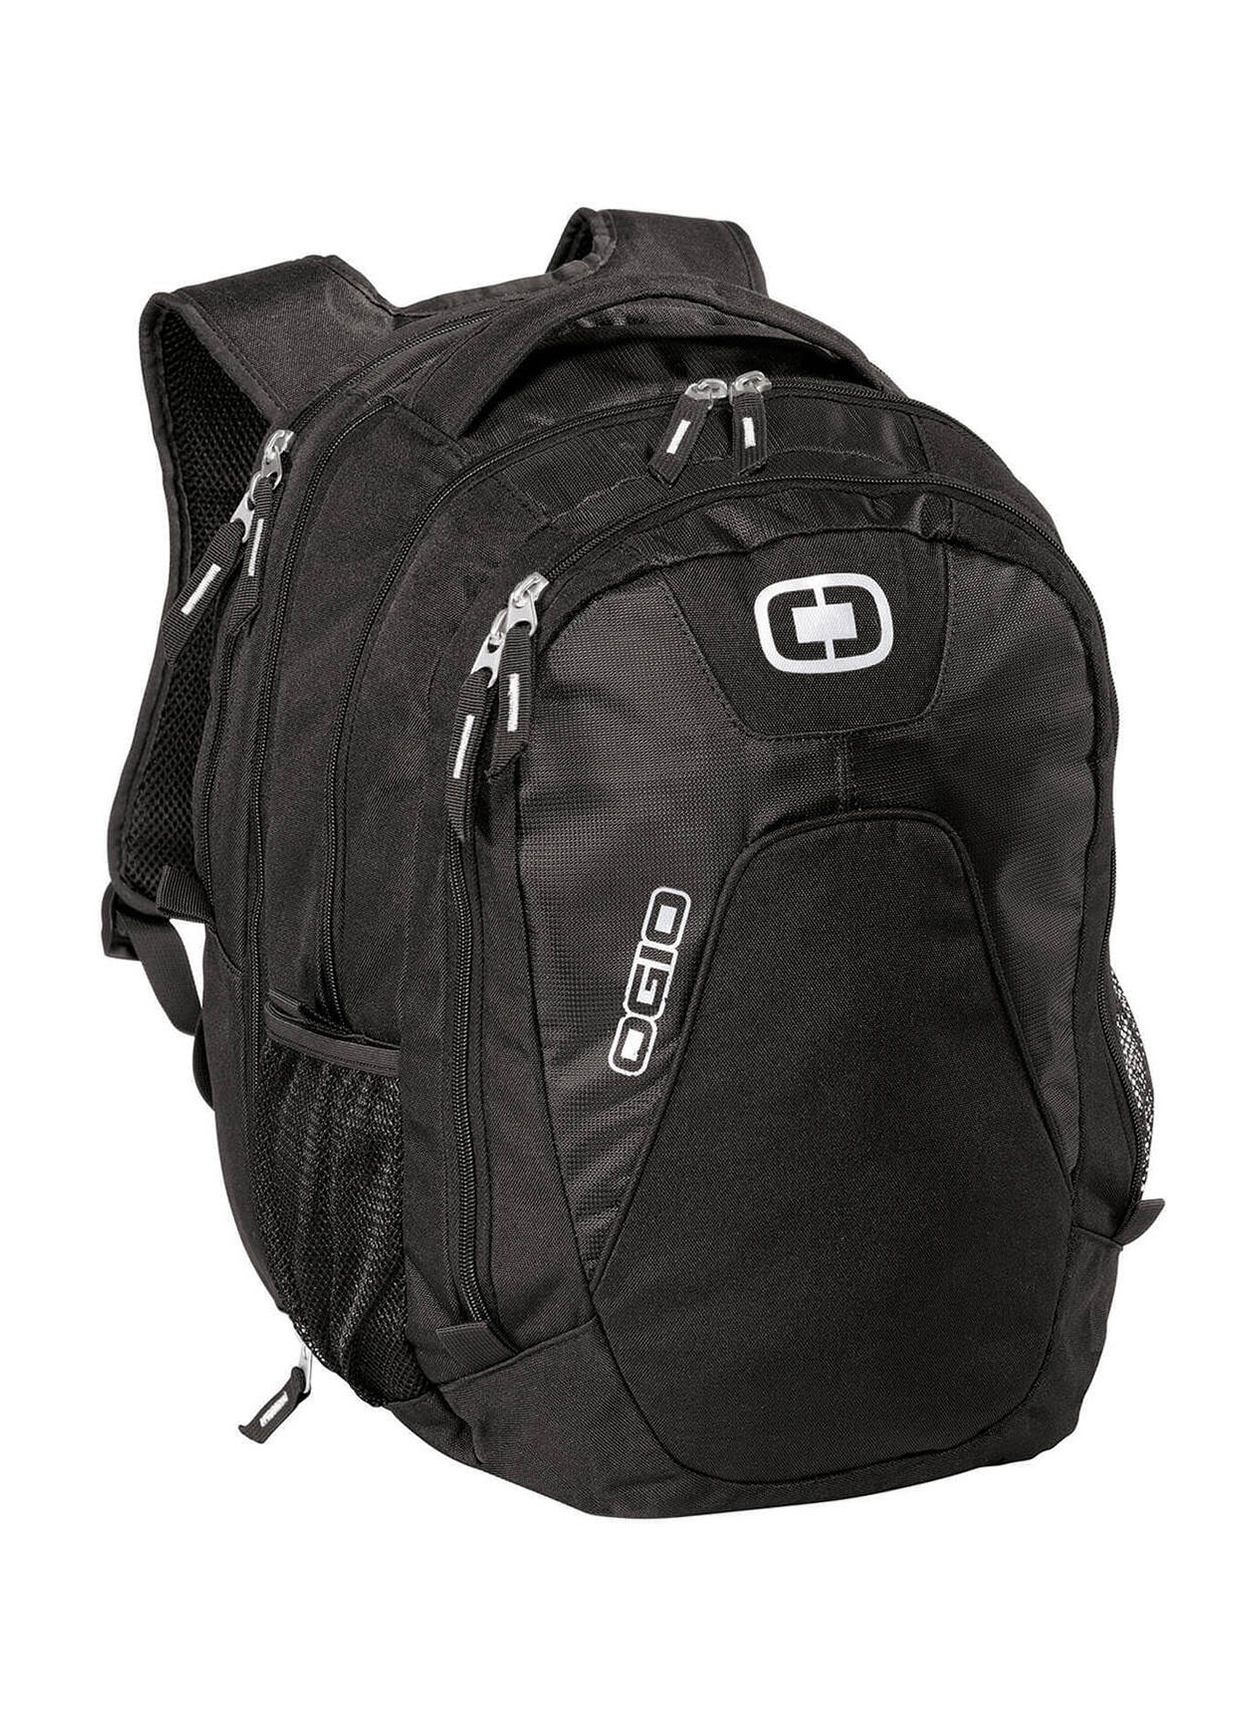 OGIO Black Juggernaut Backpack